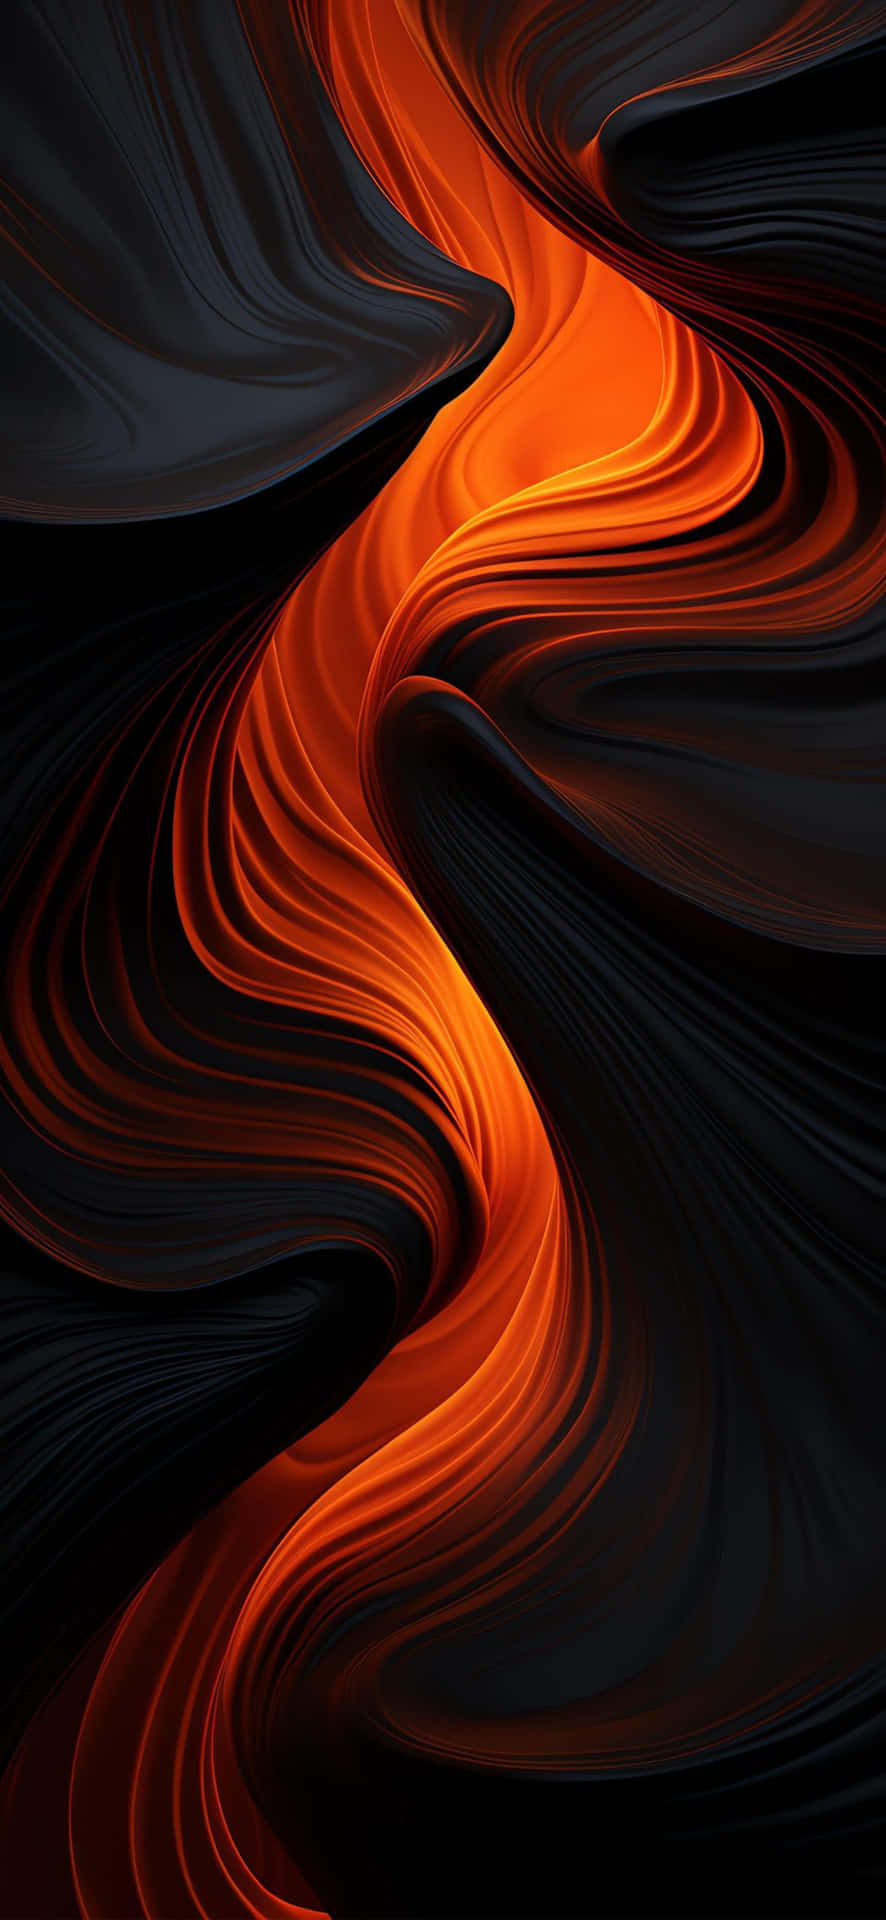 Abstract Orange Black Waves Artwork Wallpaper